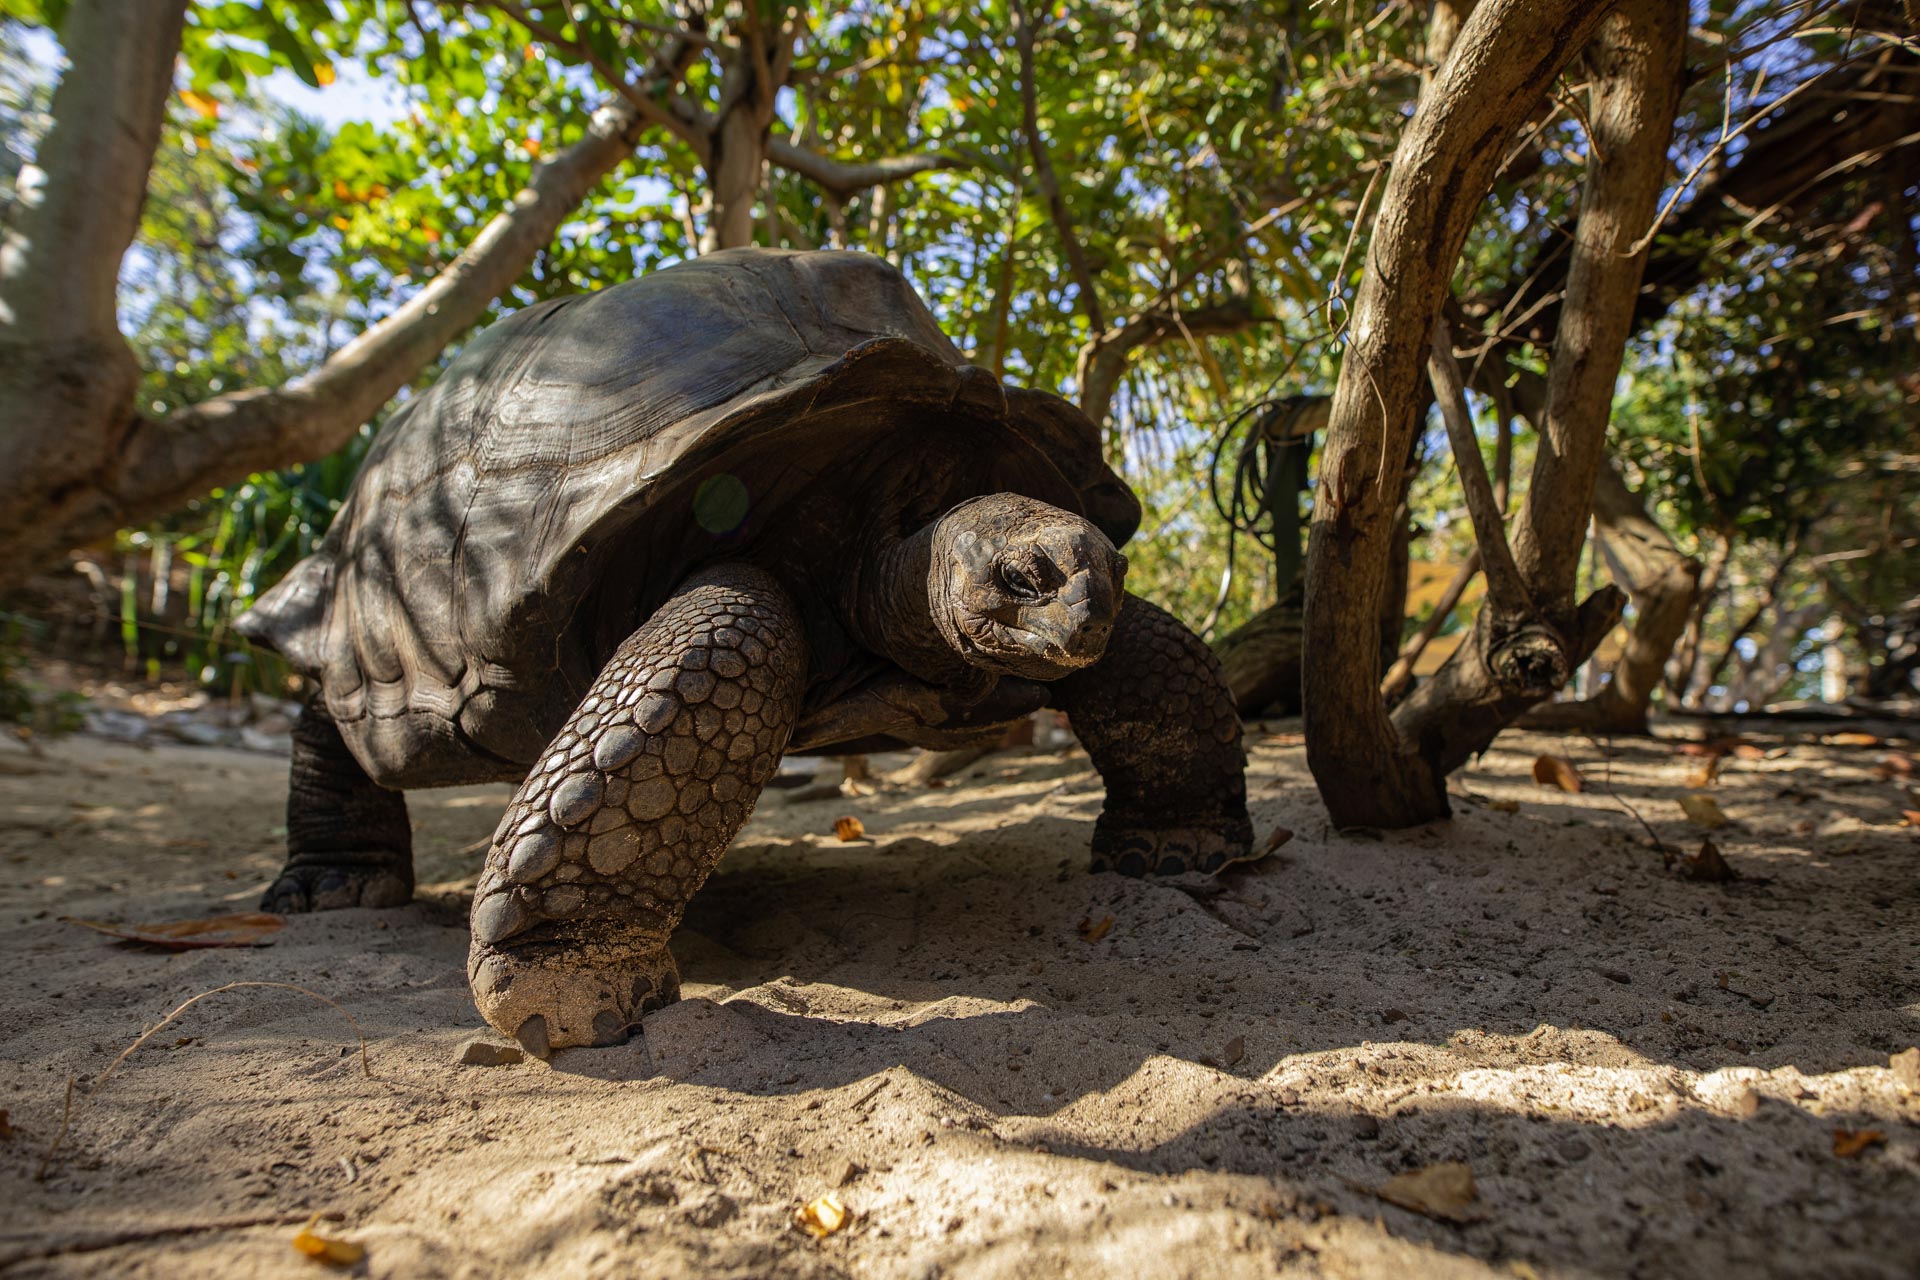 Giant Tortoise on Necker Island